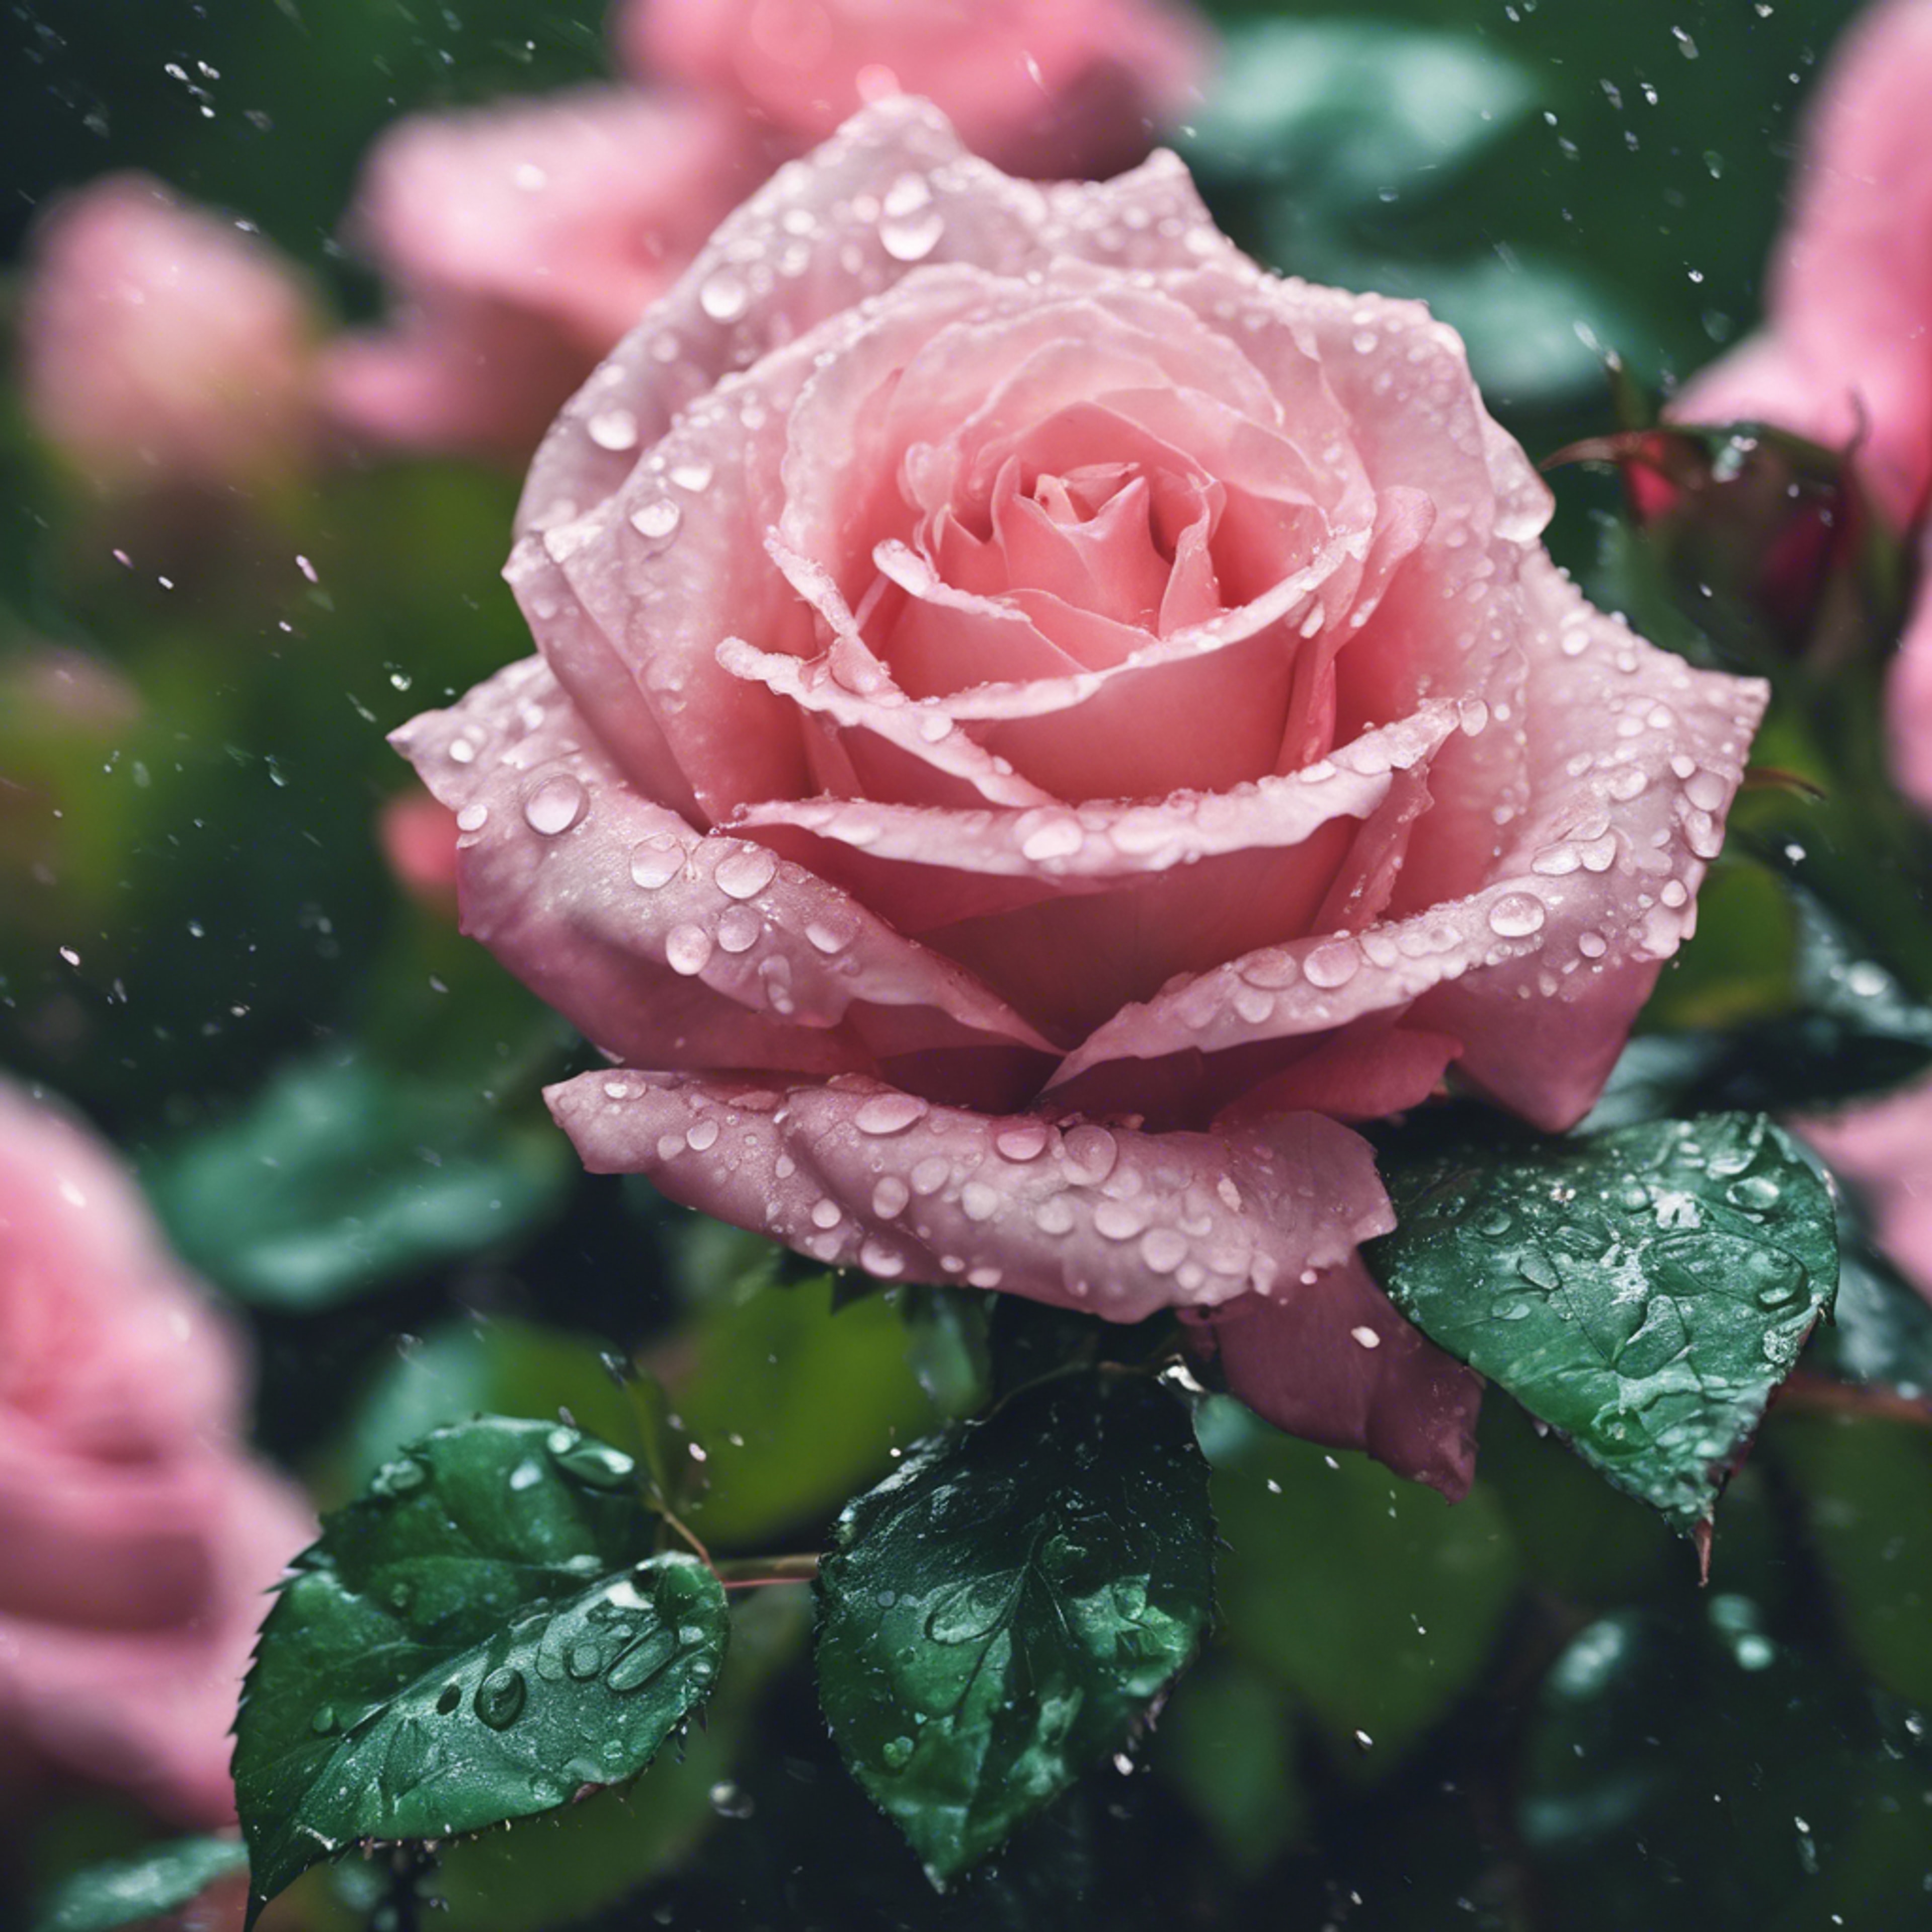 Gentle rain falling on the bright green leaves and pink roses. Hình nền[2479f95970de45b492b9]